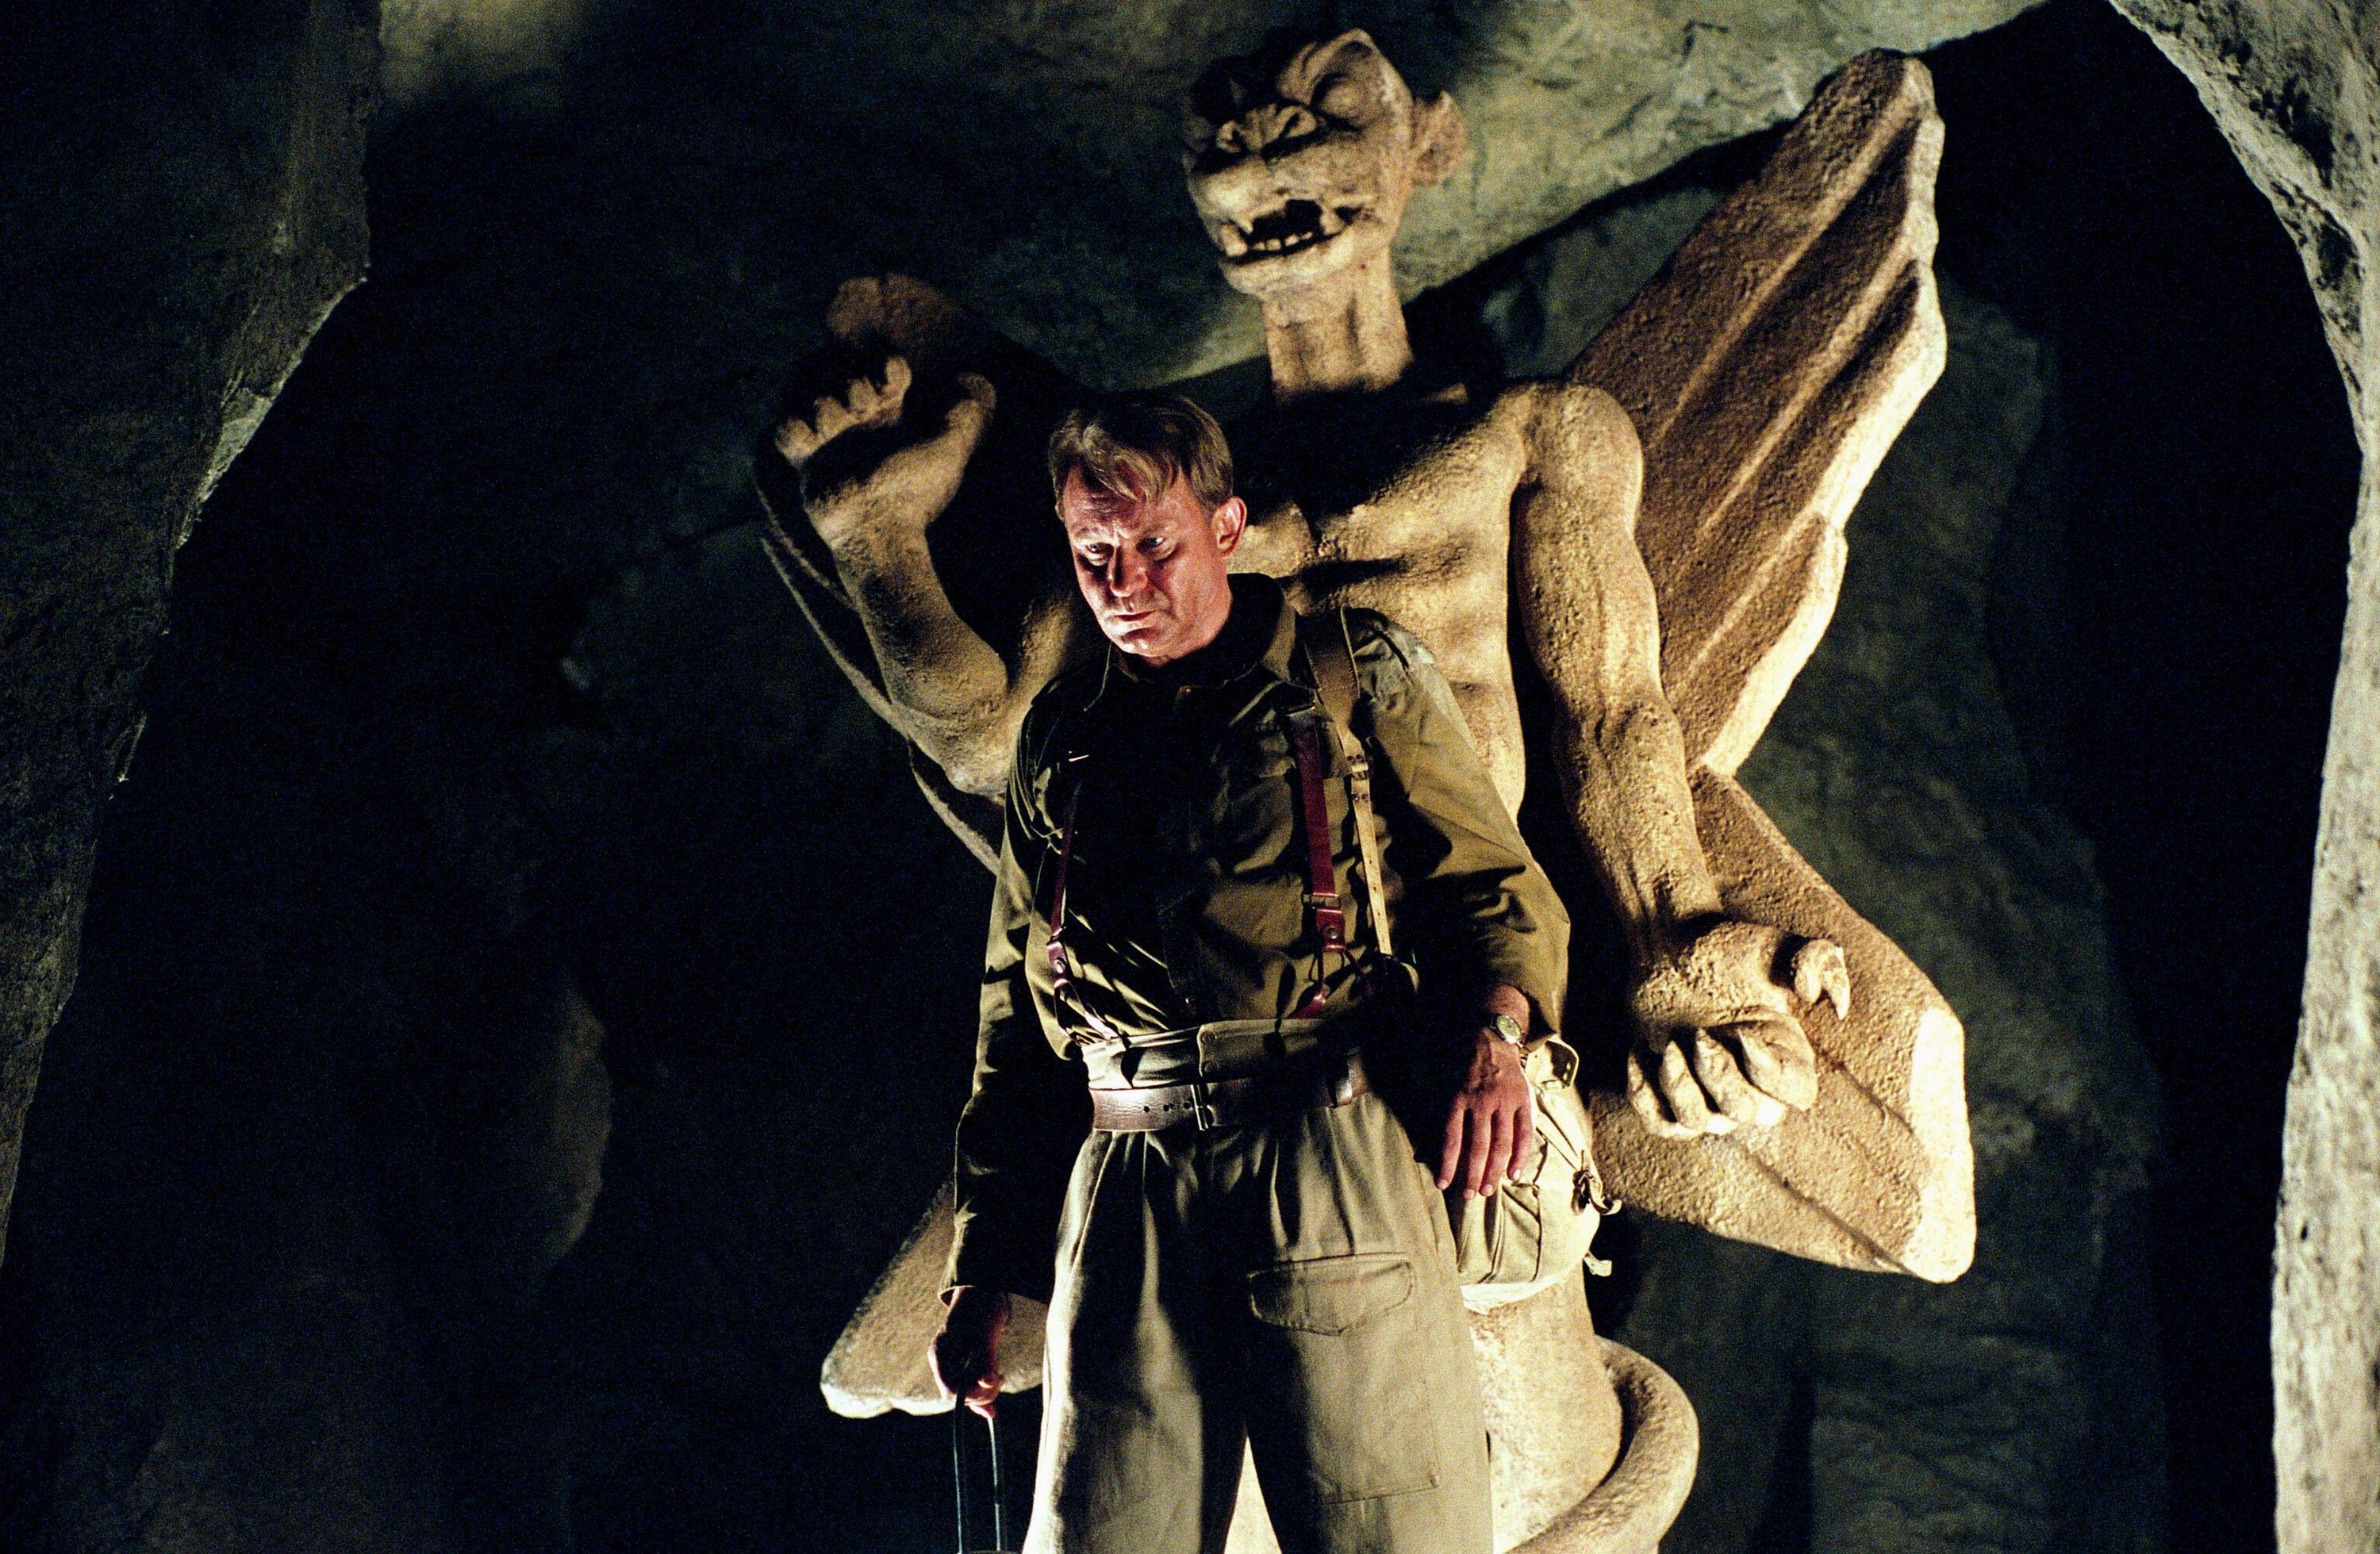 Stellan Skarsgaard stands before a large terrifying demon statue